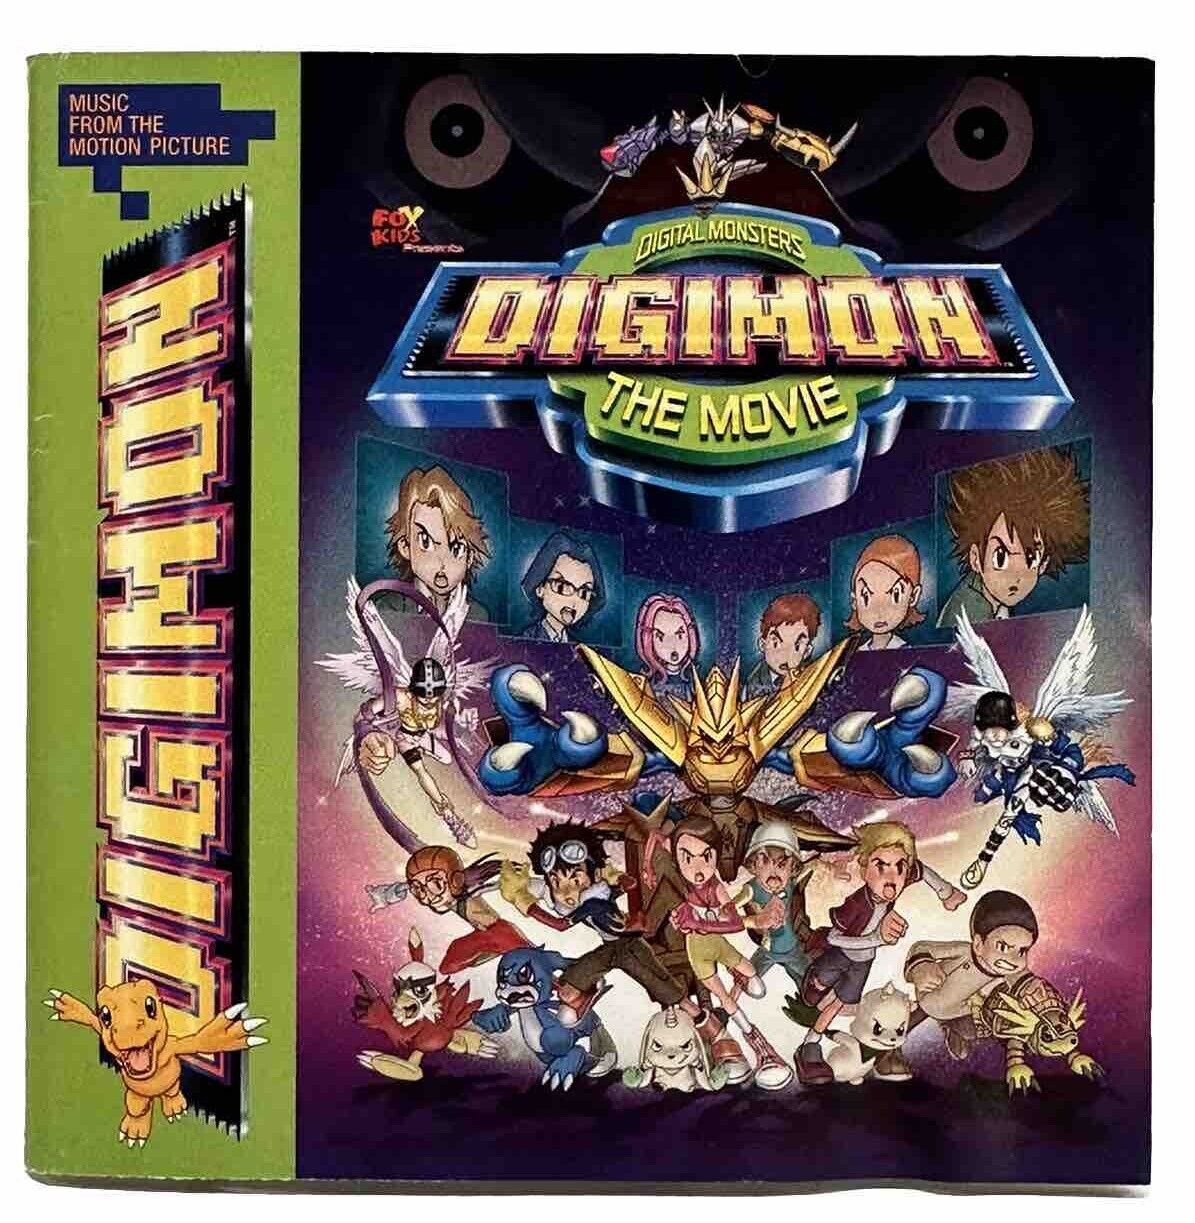 RARE Digimon The Movie Original Soundtrack by Various Artists (CD, 2000)